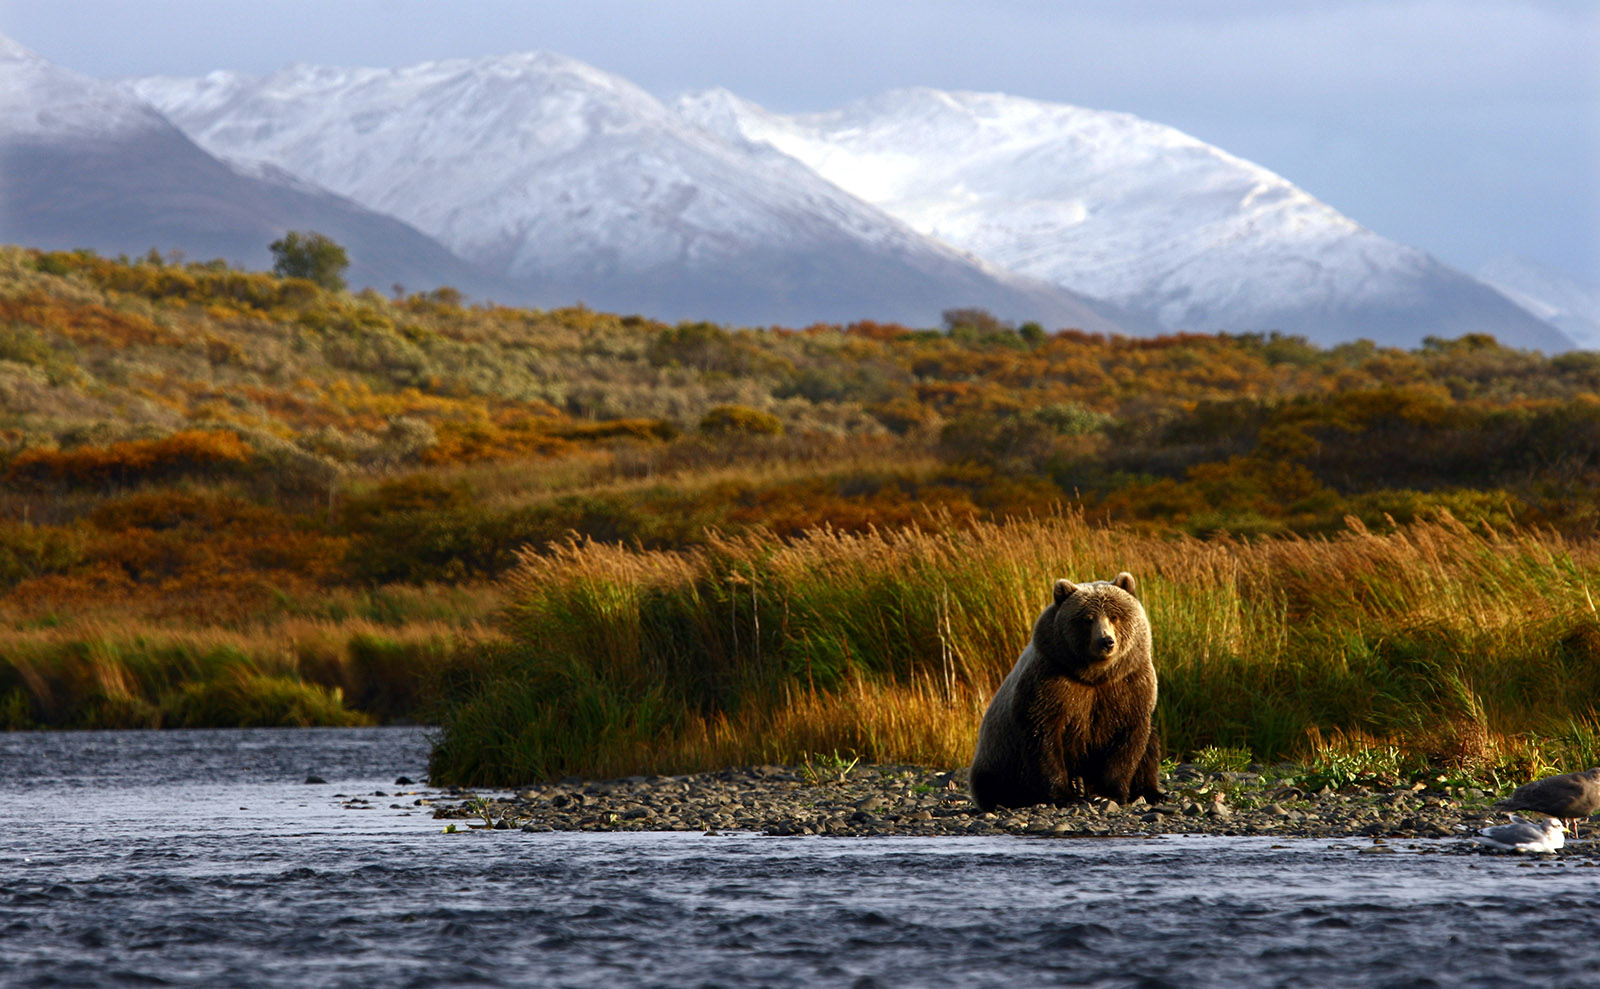 SSoP Podcast Episode 14 — Alaska: Fresh-Caught Salmon, Cake Mix, and So Many Bears